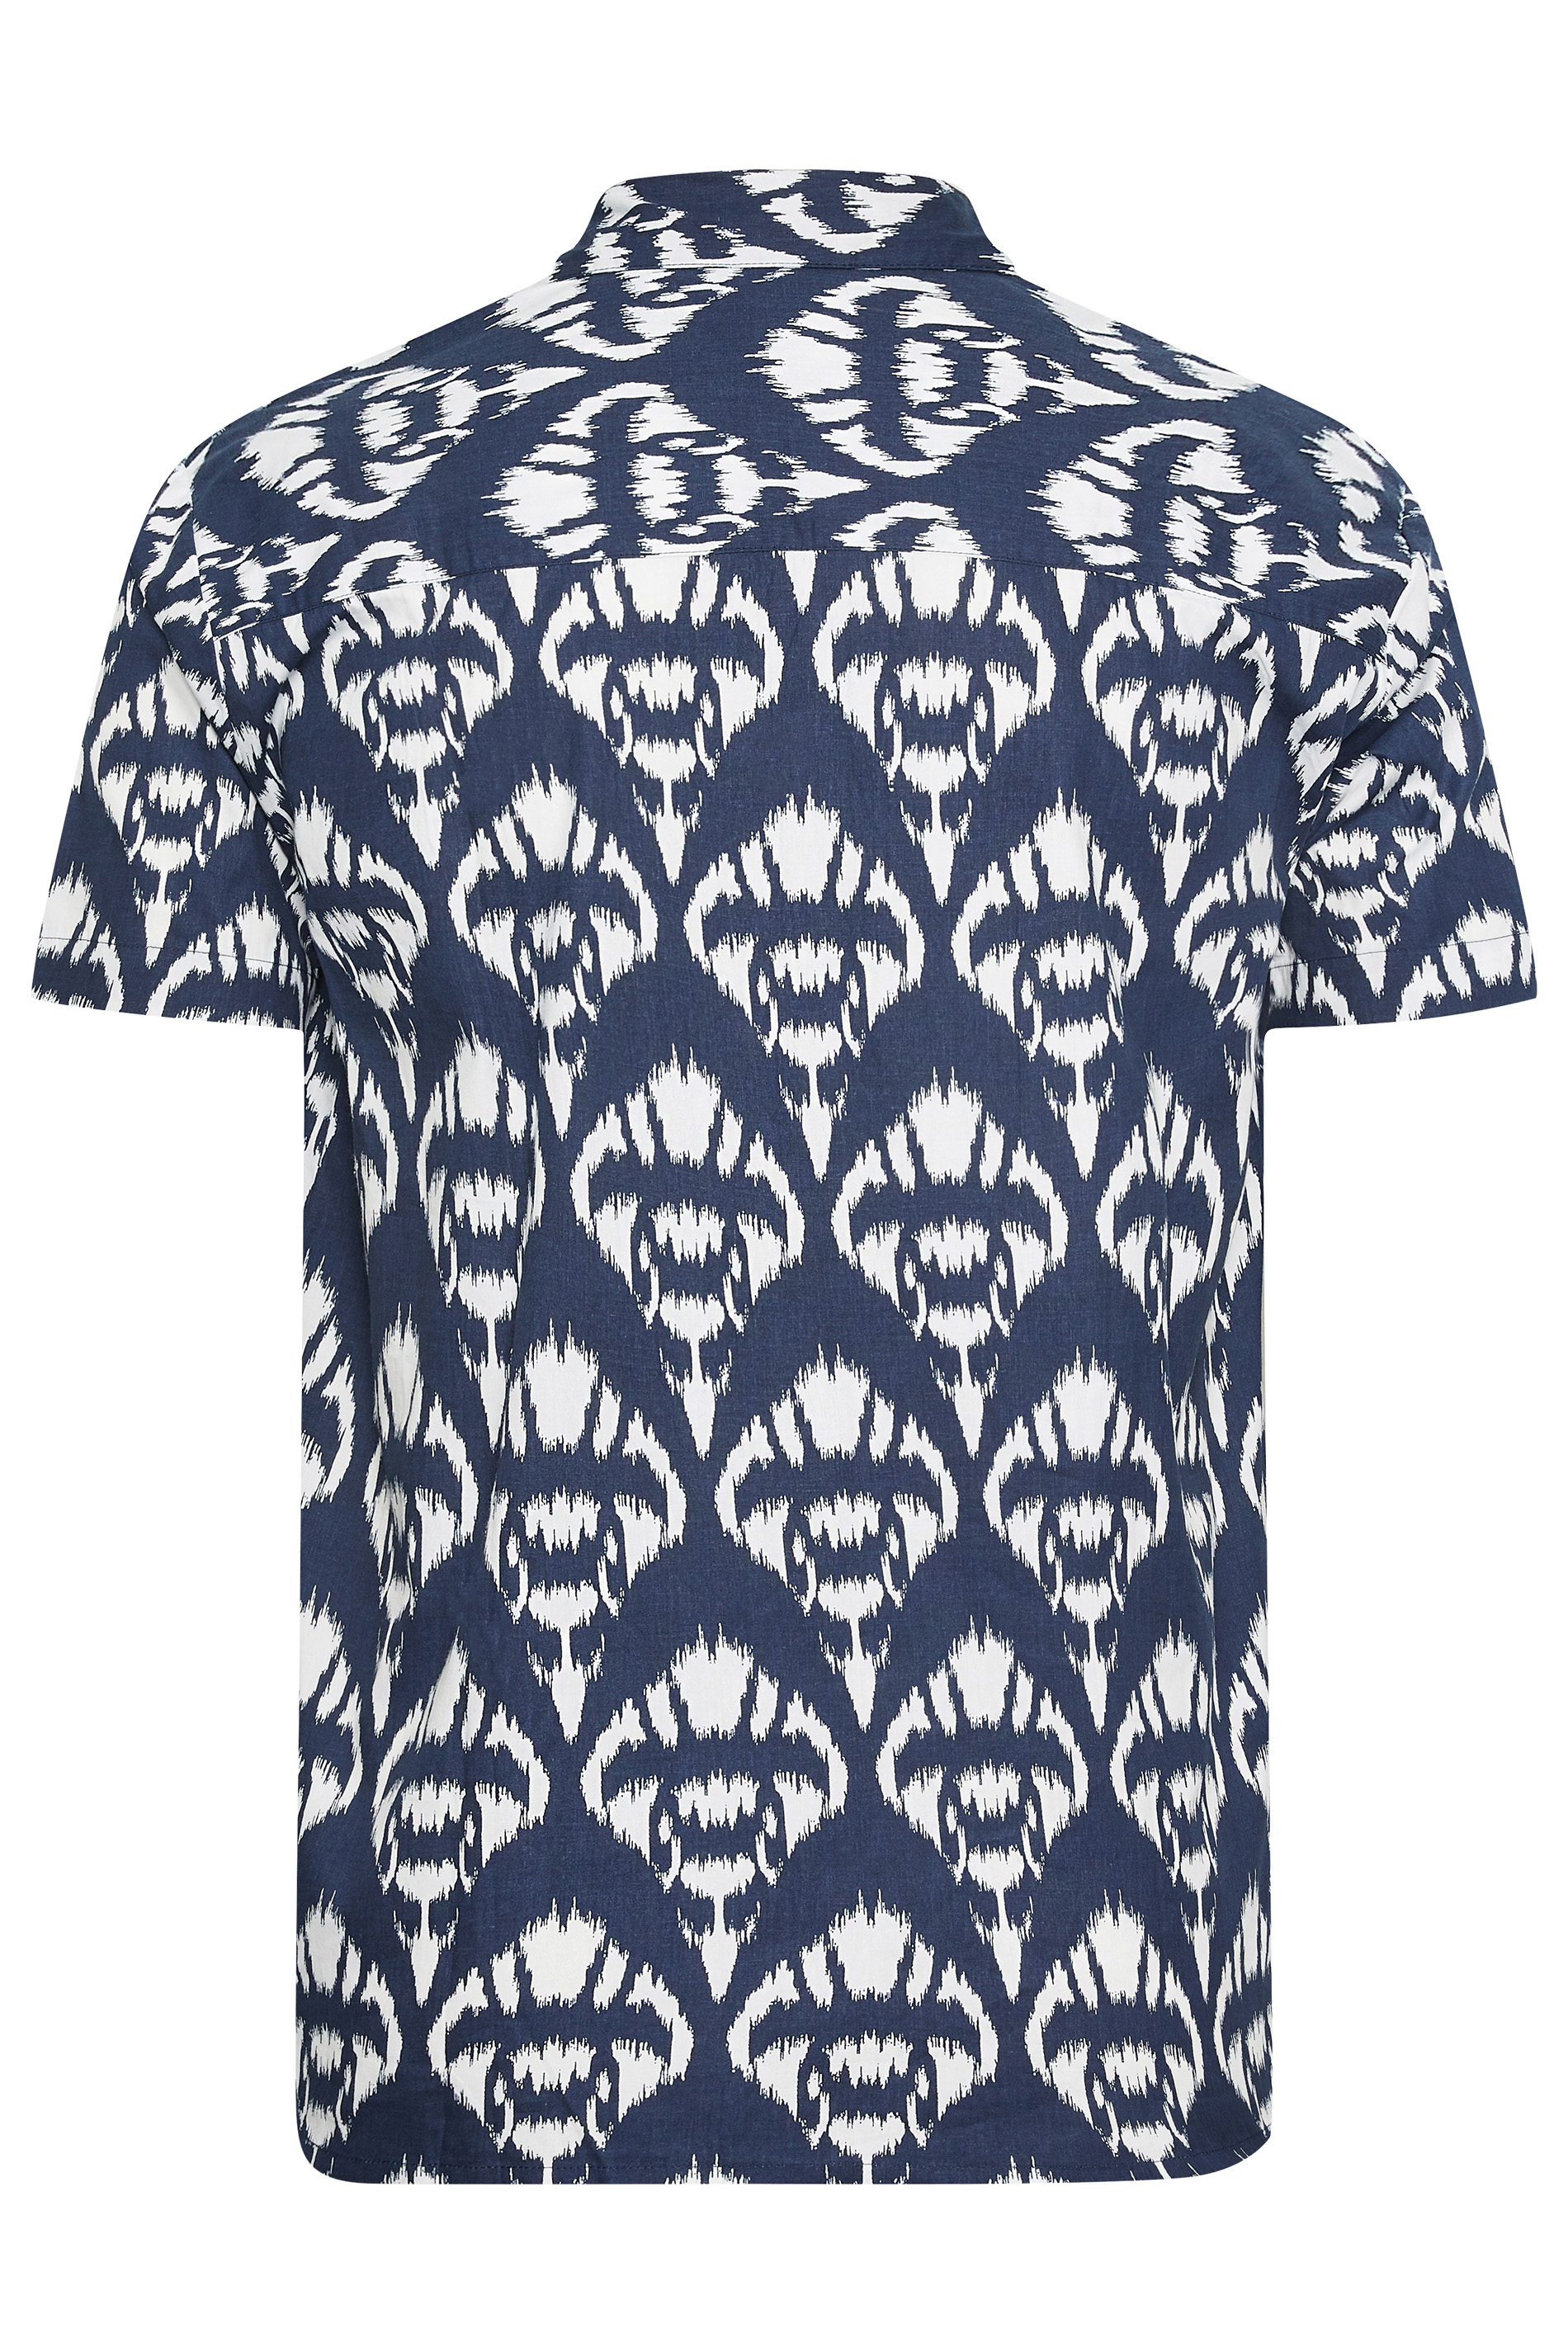 BadRhino Big & Tall Navy Blue Abstract Print Shirt | BadRhino 3